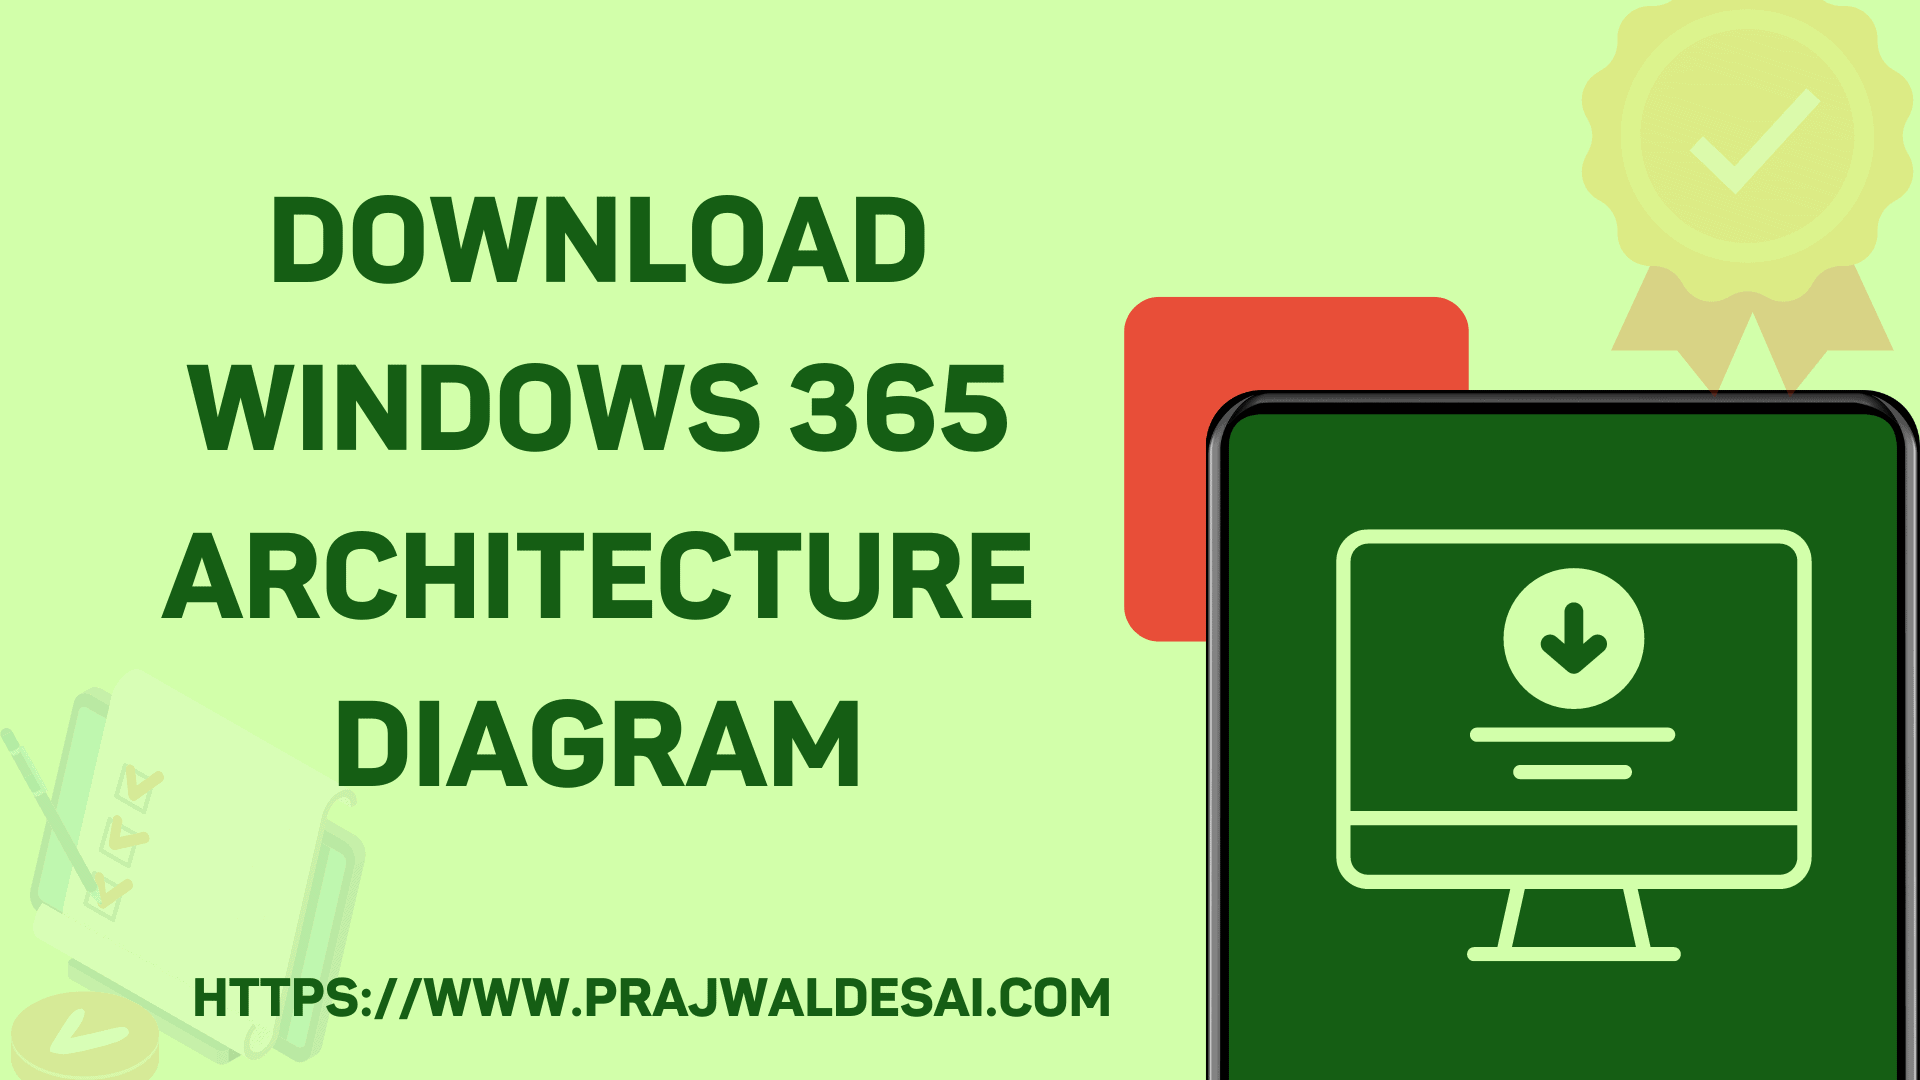 Download Windows 365 Architecture Diagram